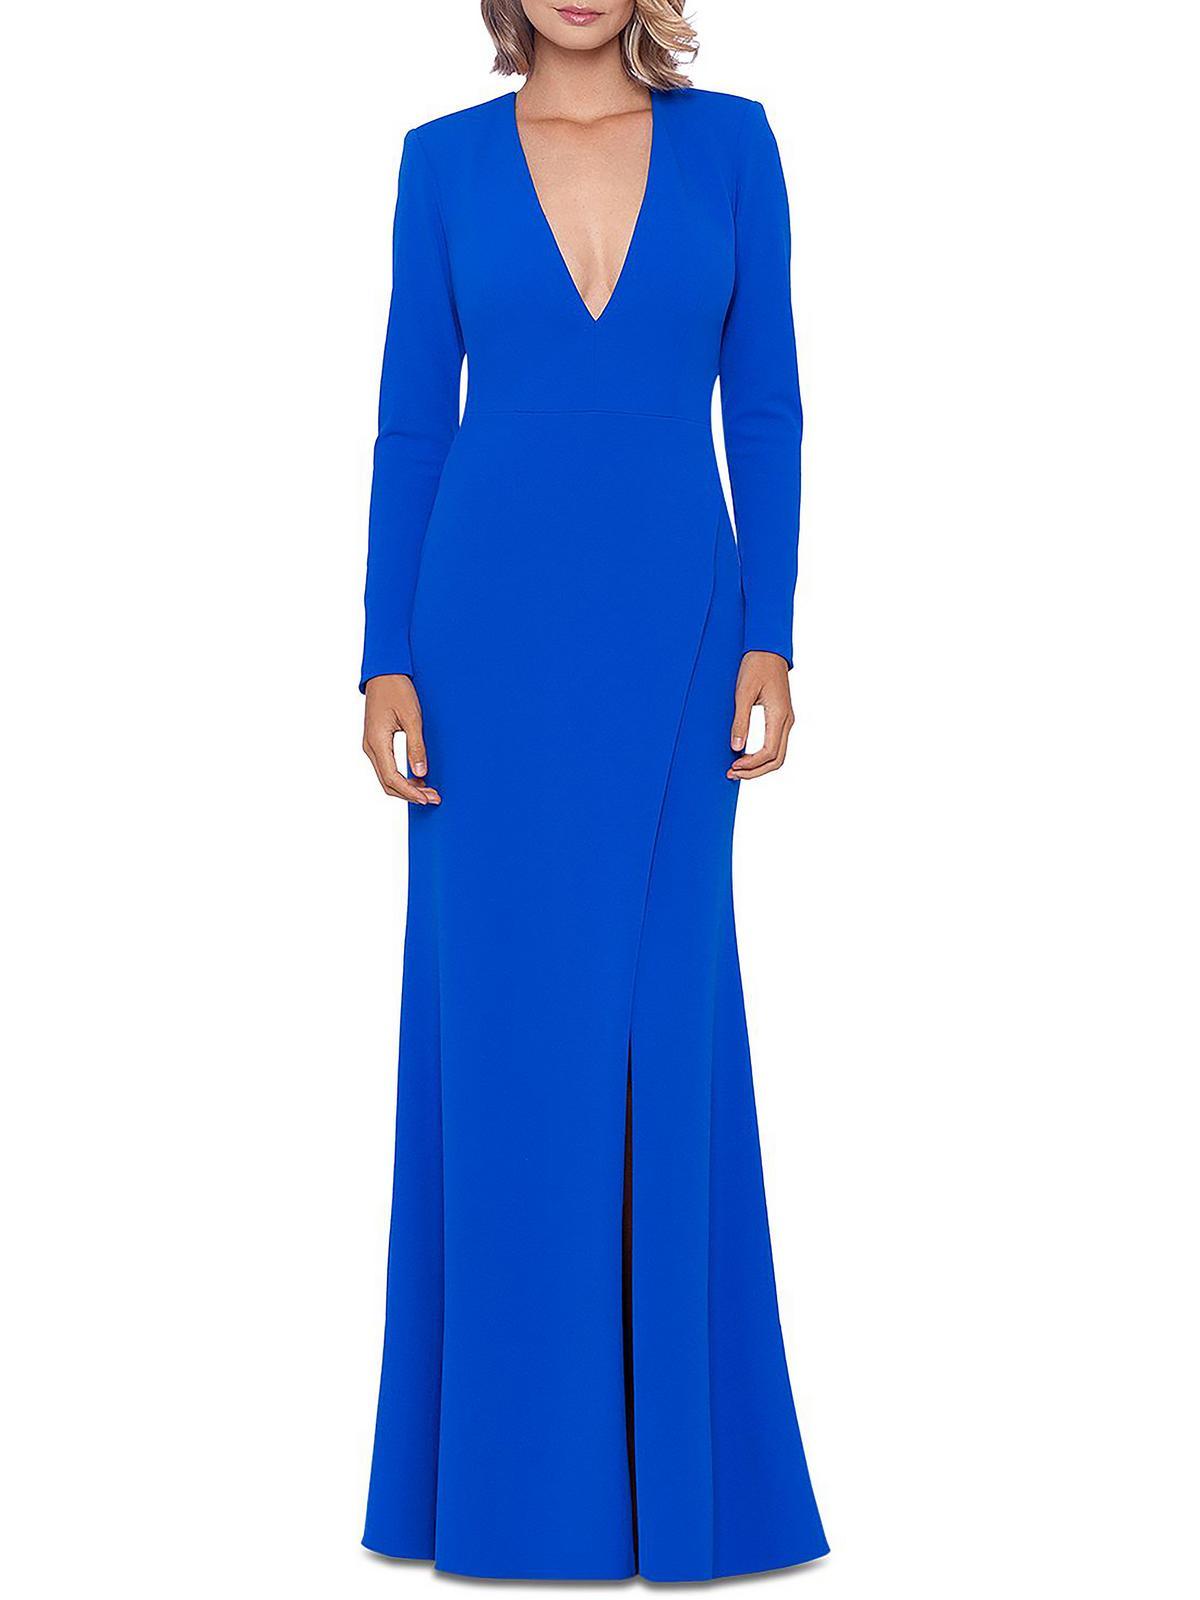 Aqua dresses gown size - Gem